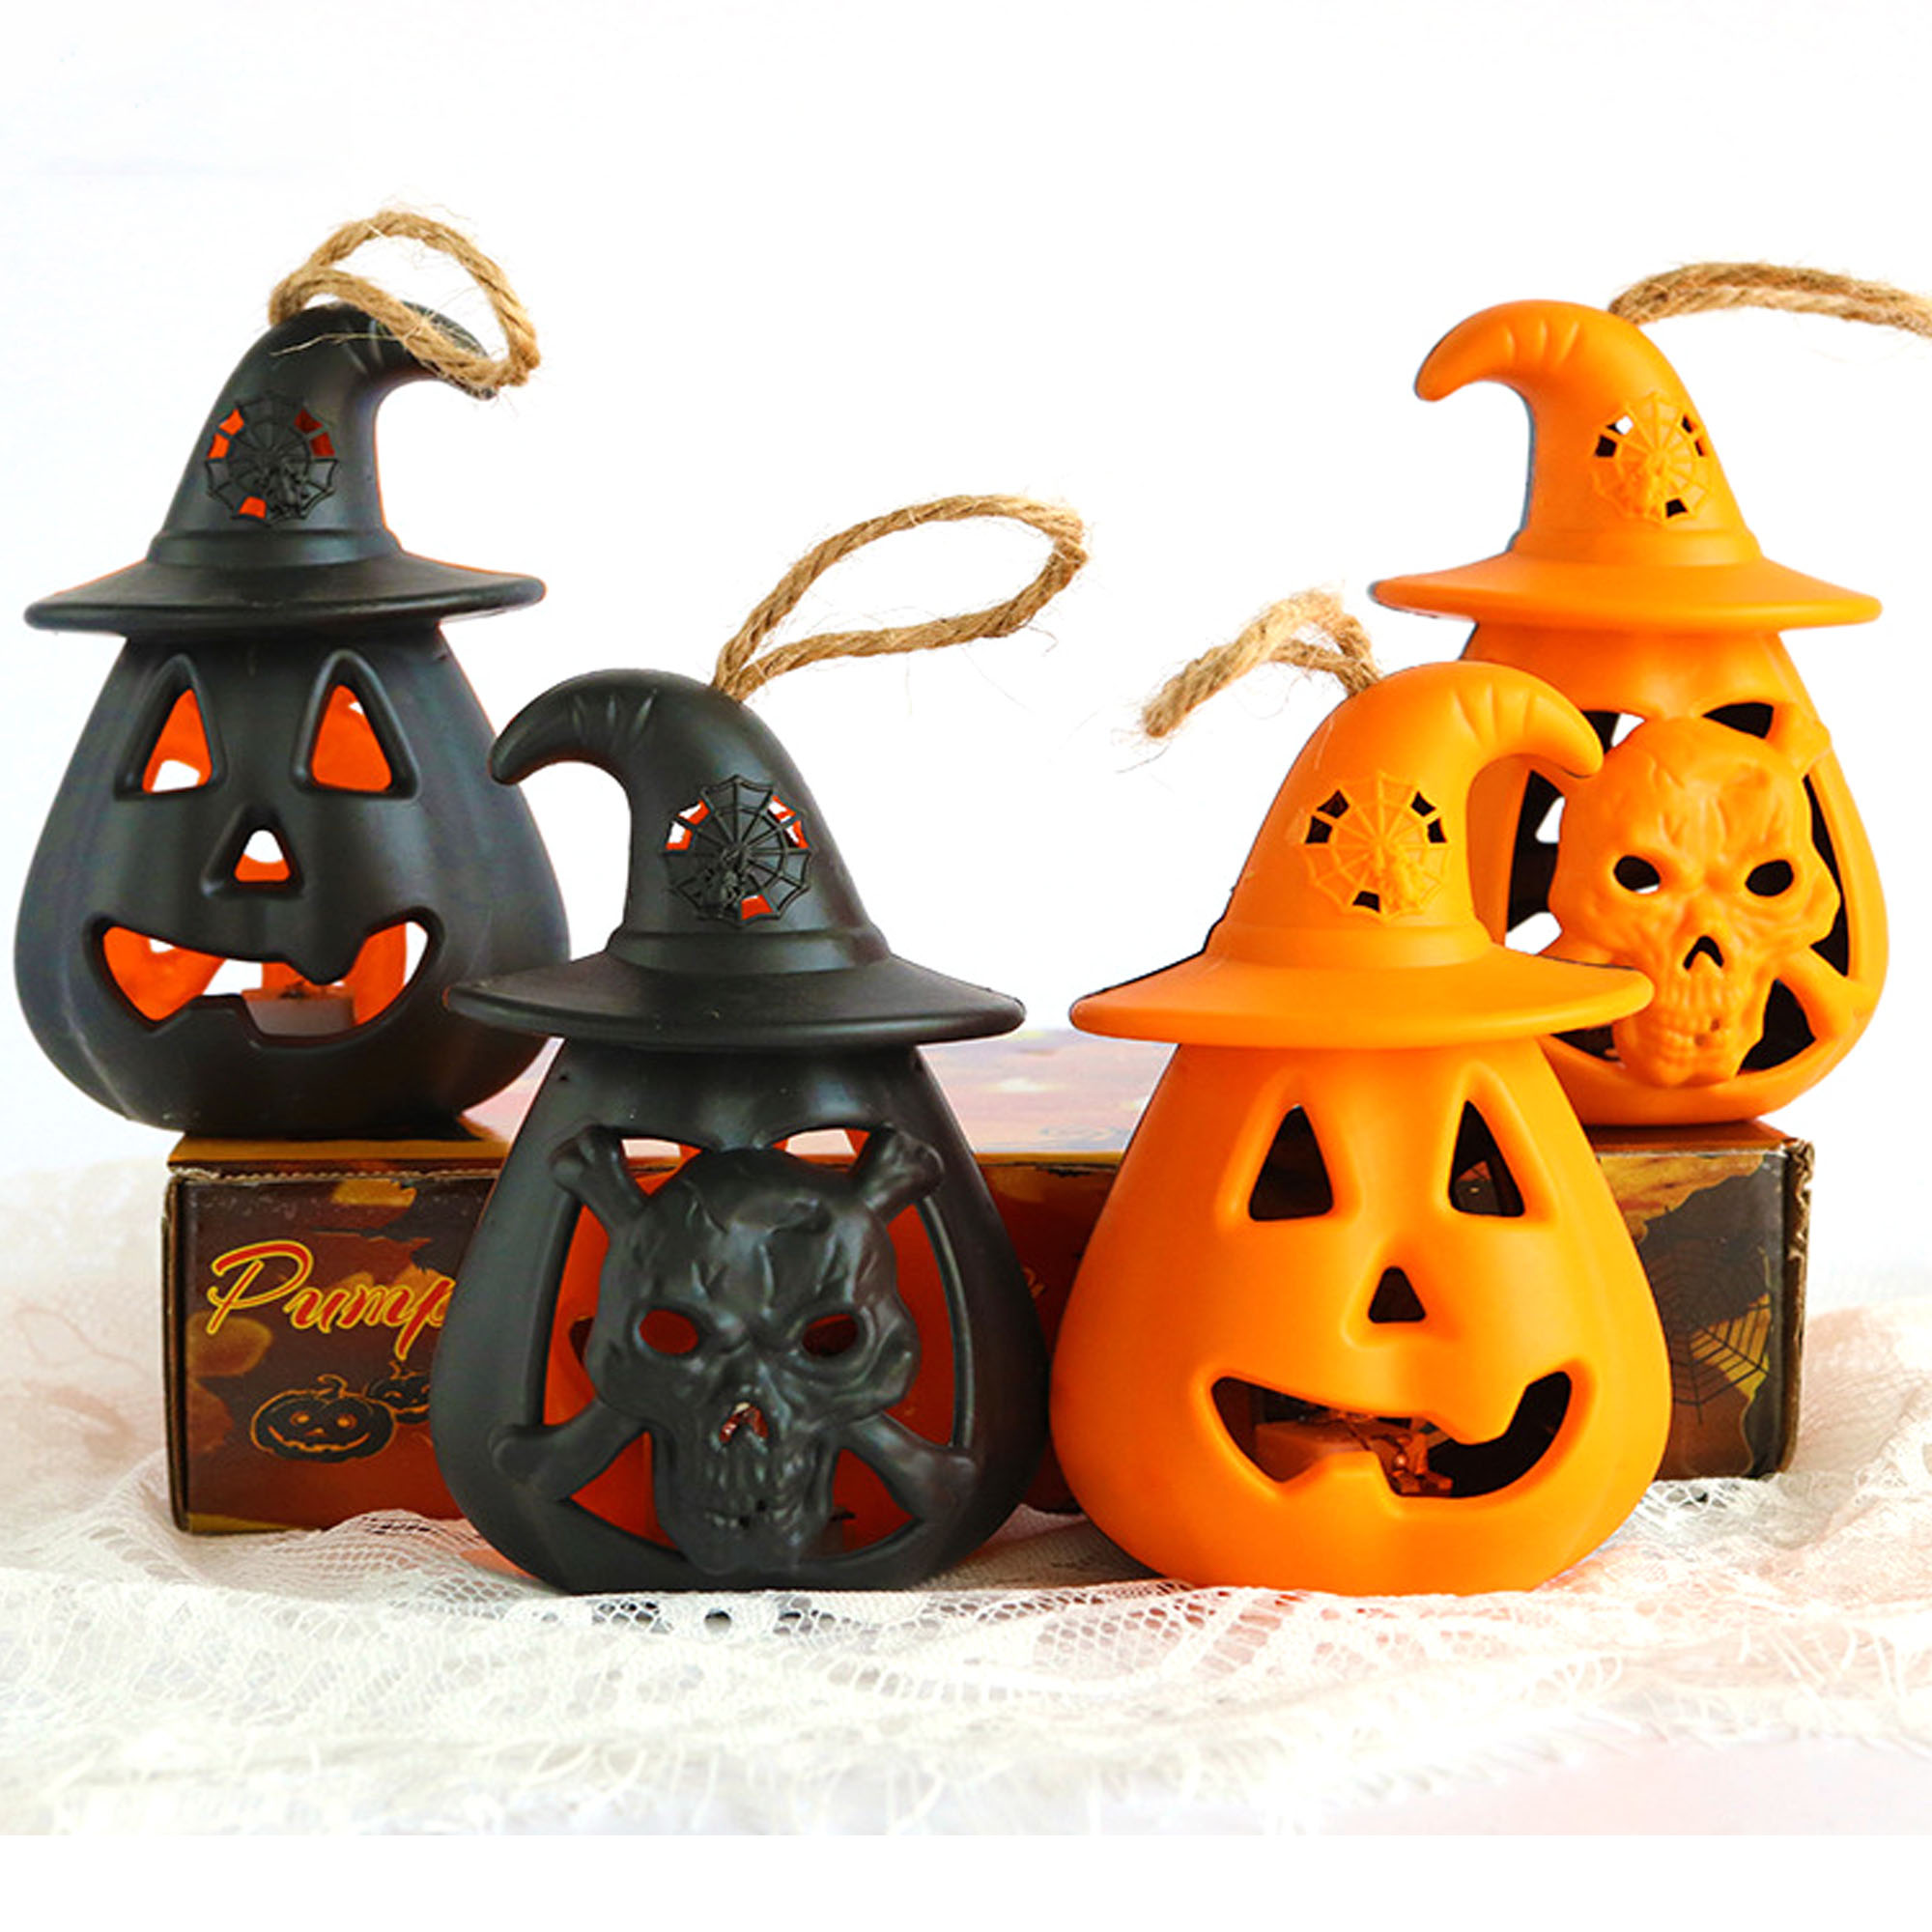 Jack-o-lantern for Halloween